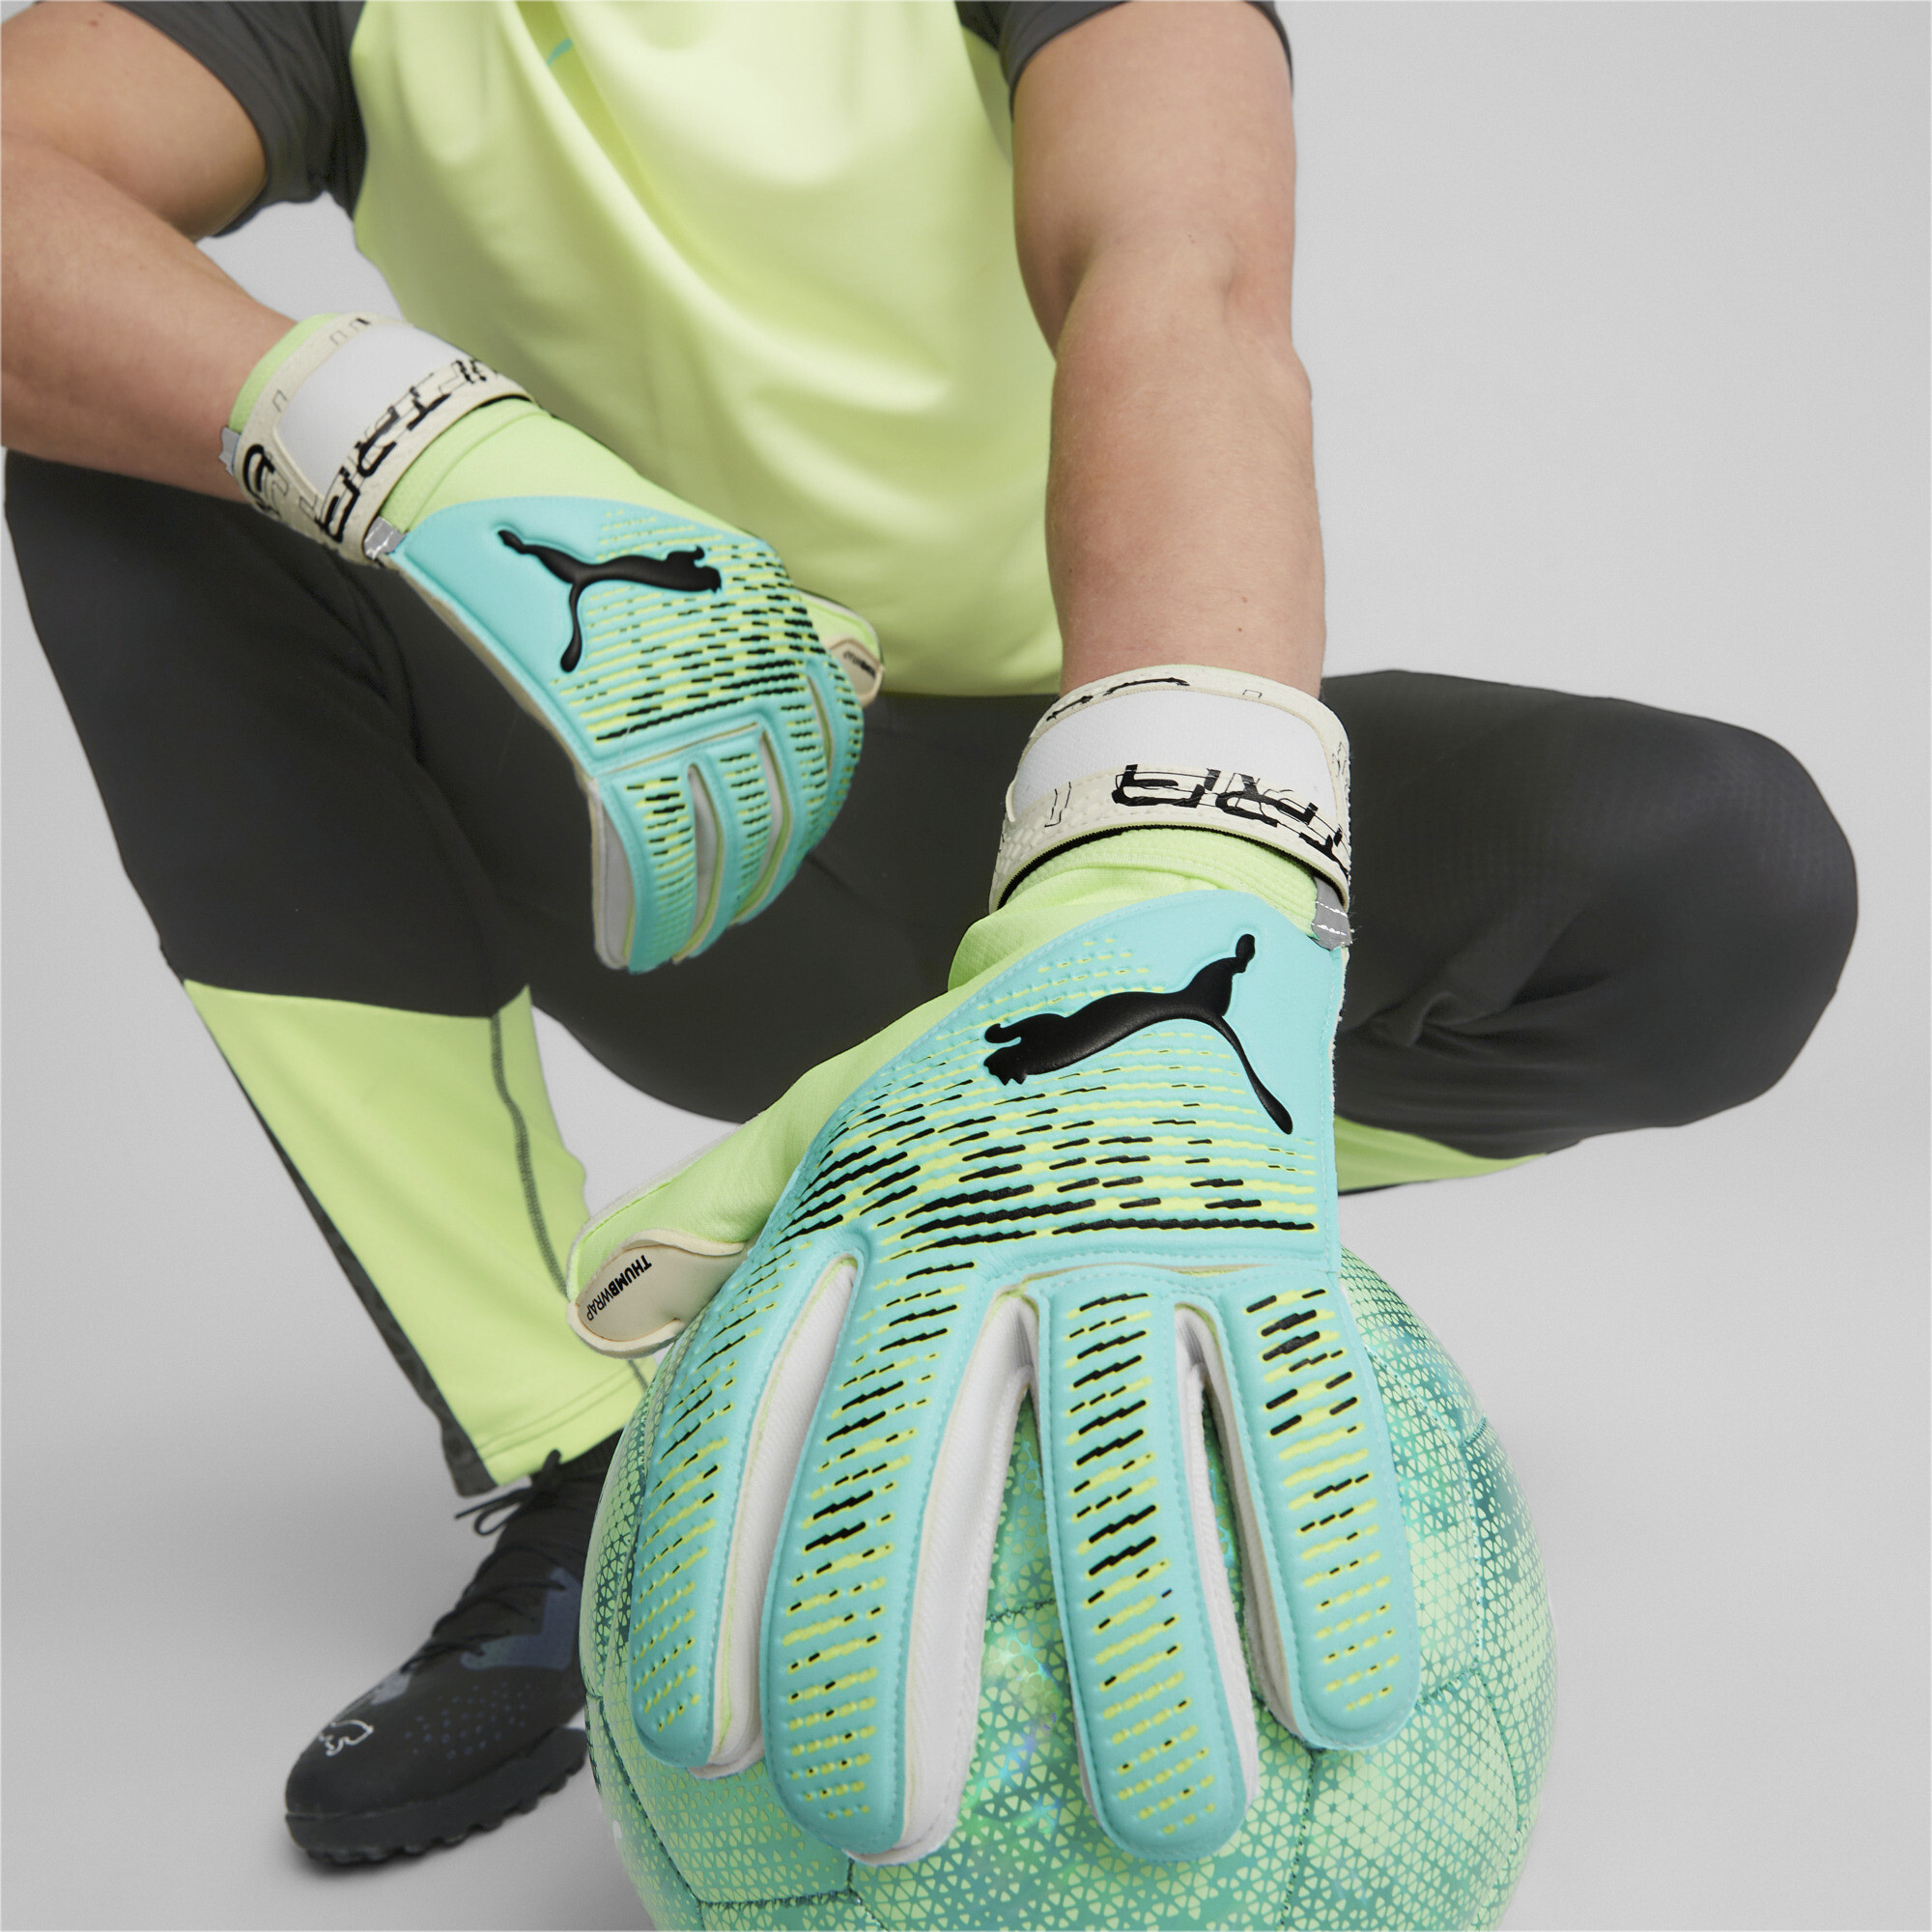 Puma ULTRA Grip 2 RC Goalkeeper Gloves, Green, Size 7.5, Accessories